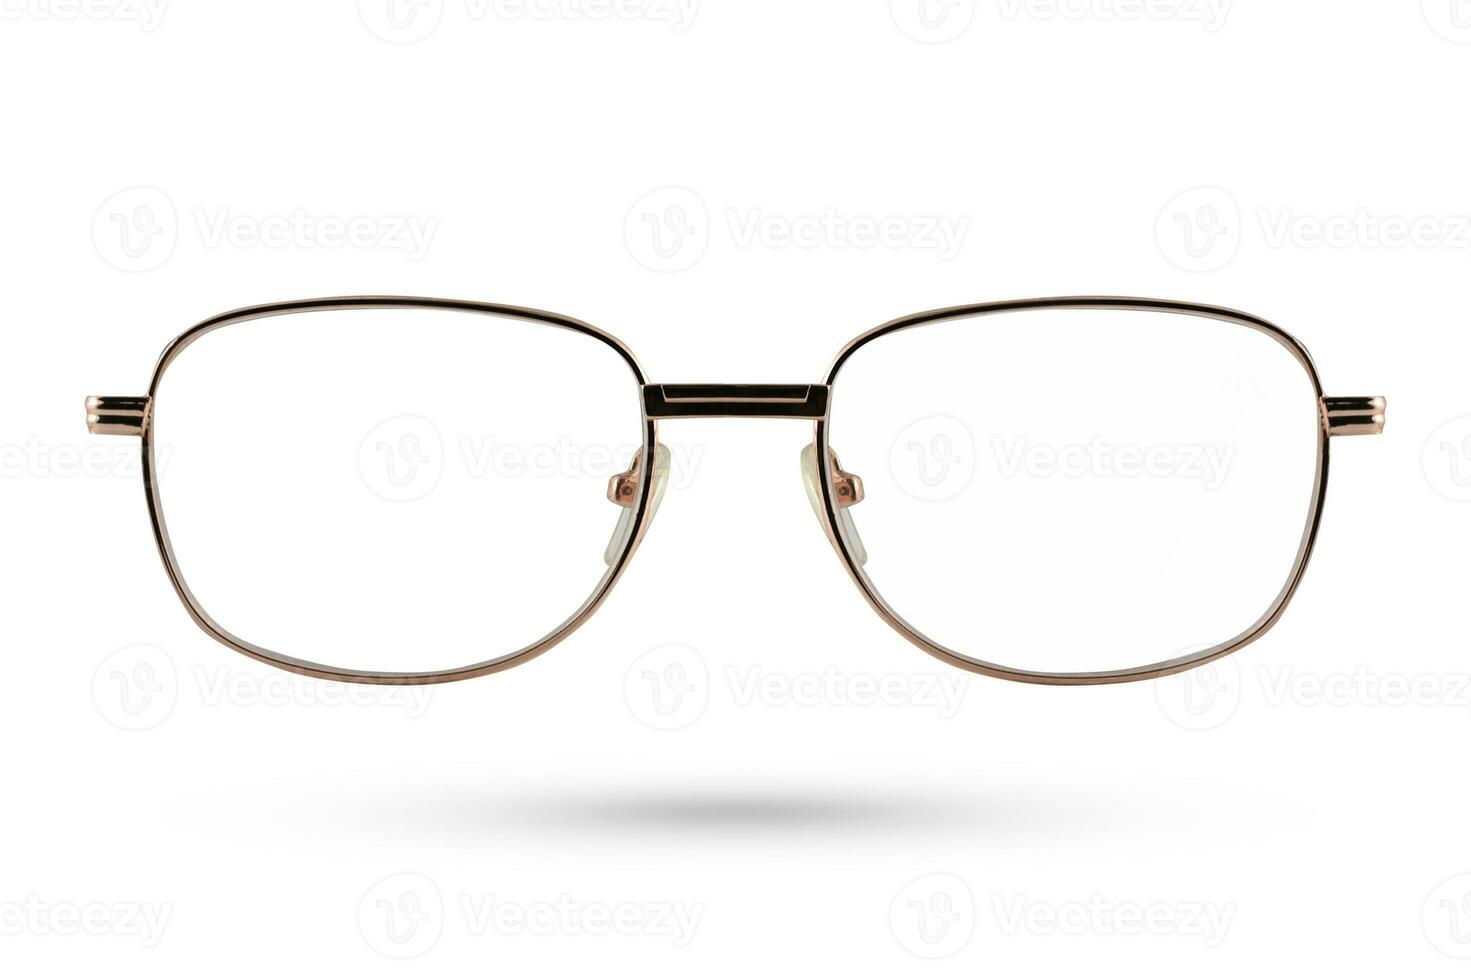 mode glasögon stil metallram isolerat på vit bakgrund. foto